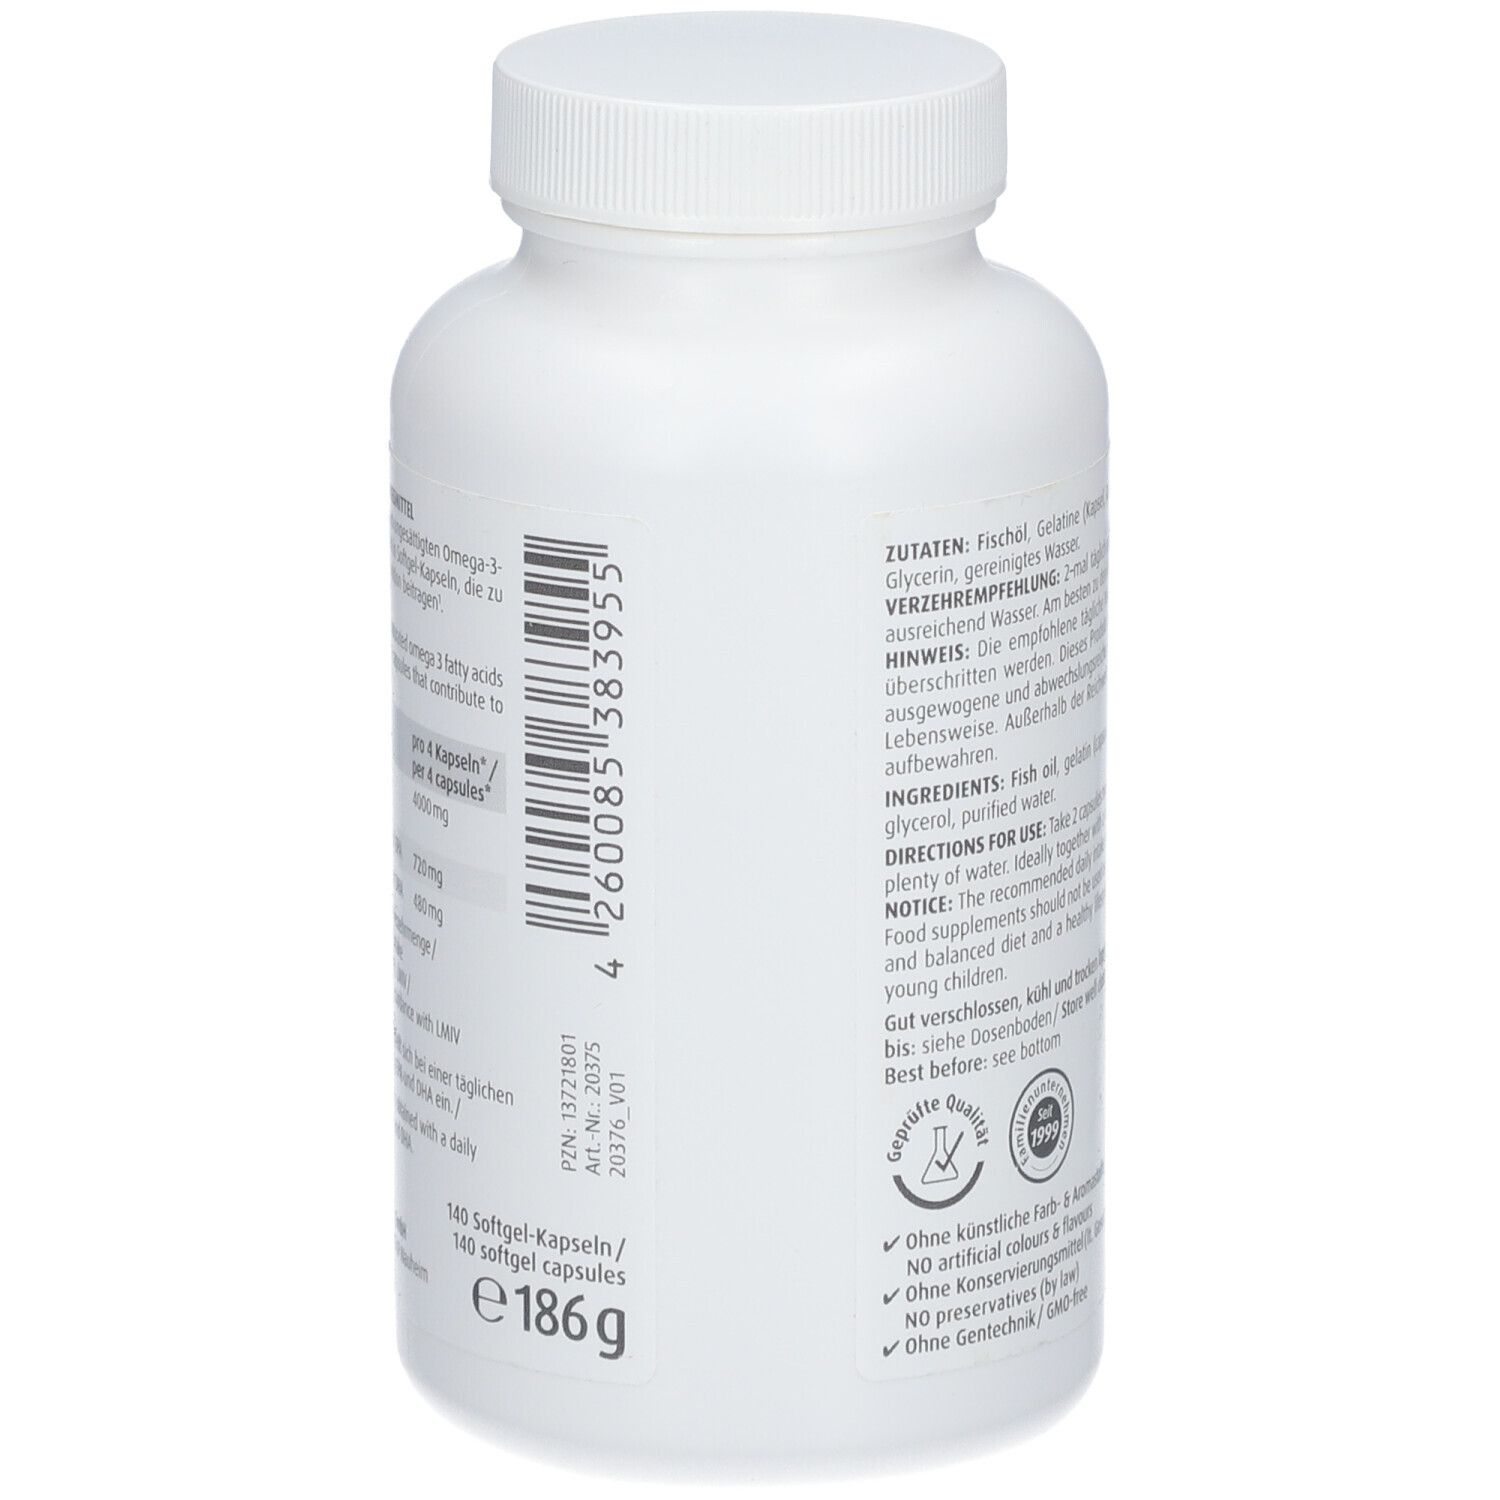 ZeinPharma® Omega-3 Fischöl 1000 mg